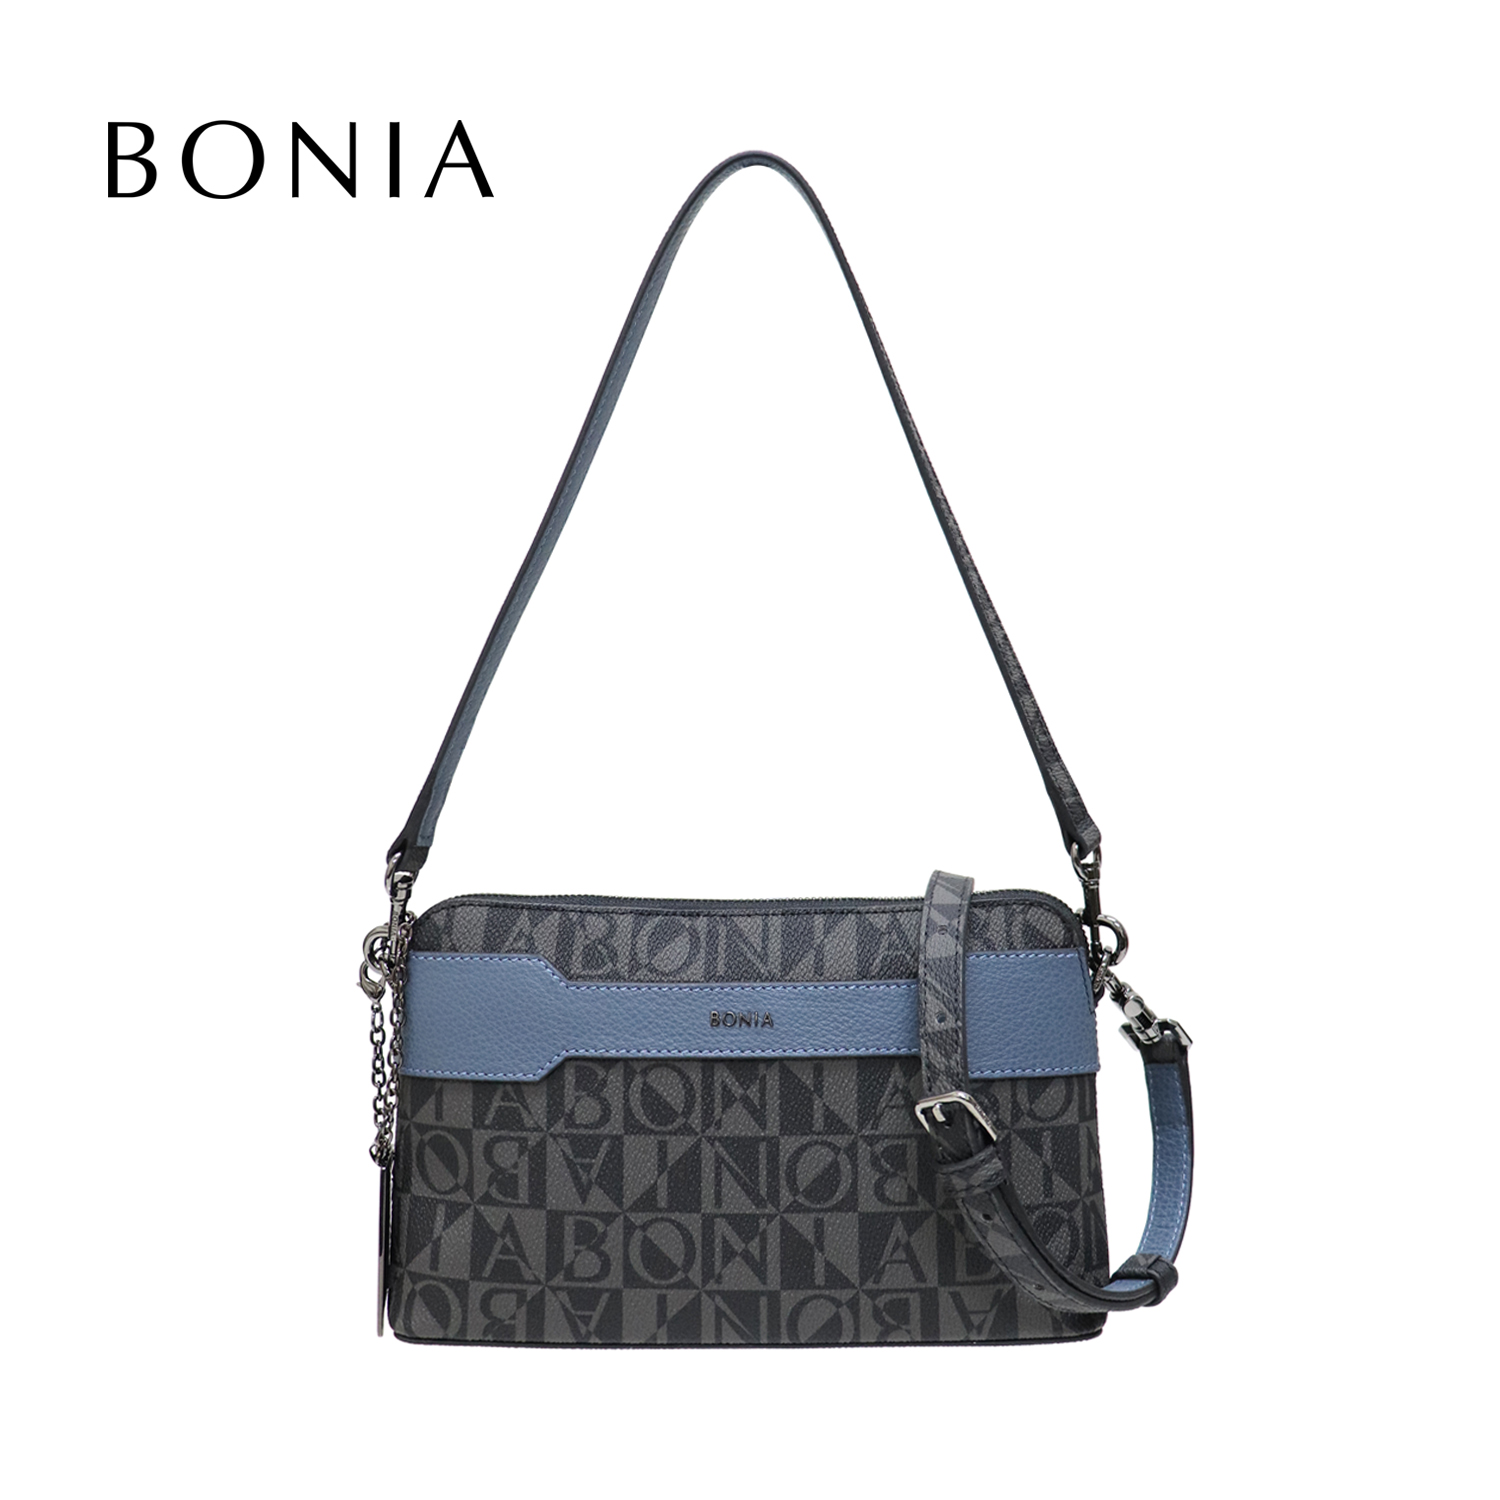 BONIA - The Bolster Ranger Crossbody Bag stacks up great against any  competition. Shop now:  crossbody-bag #BONIA #LaLuna